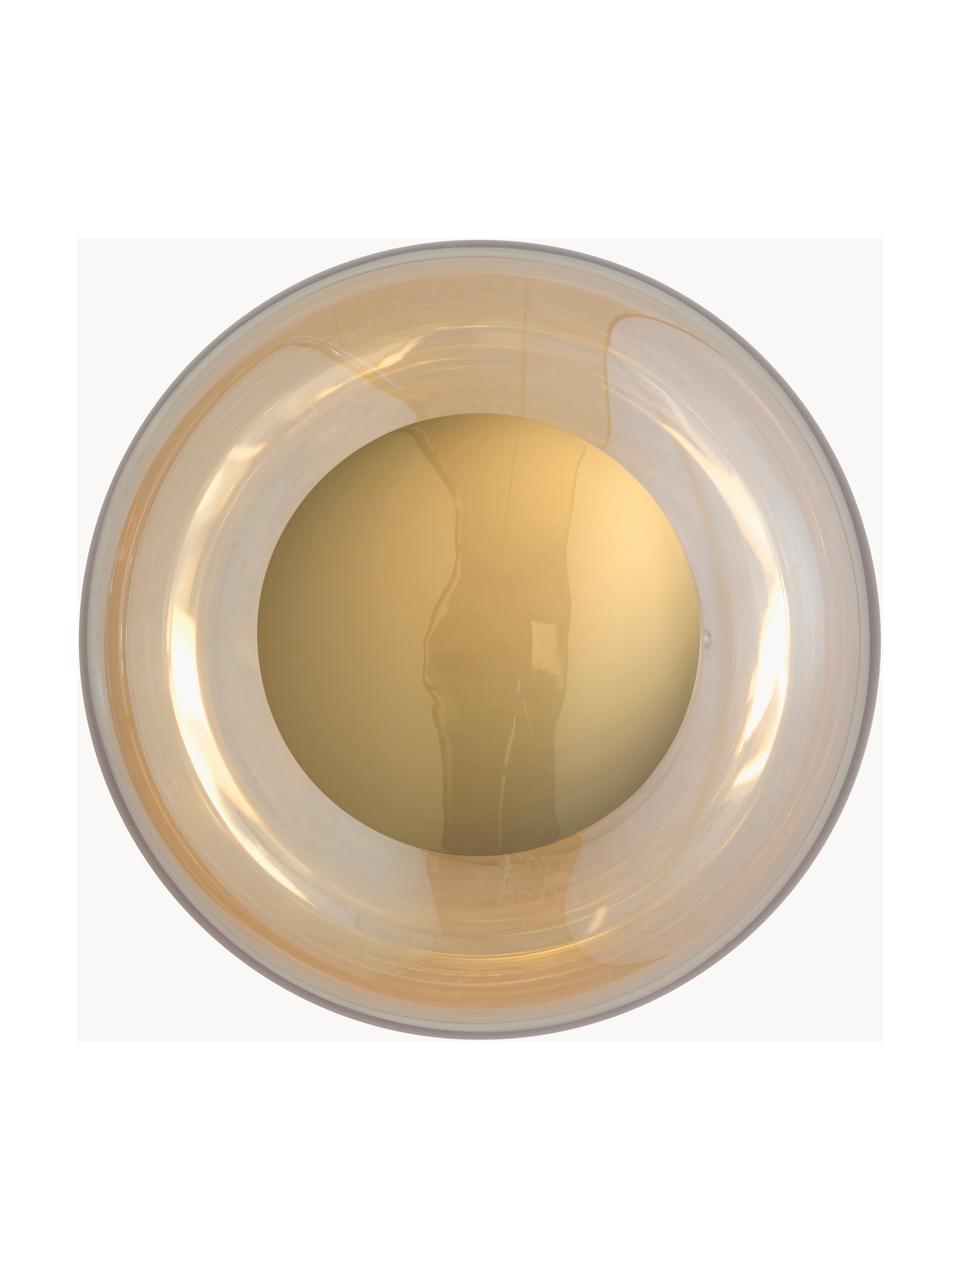 Mondgeblazen wandlamp Horizon, Lampenkap: mondgeblazen glas, Lichtbruin, goudkleurig, Ø 21 x D 17 cm